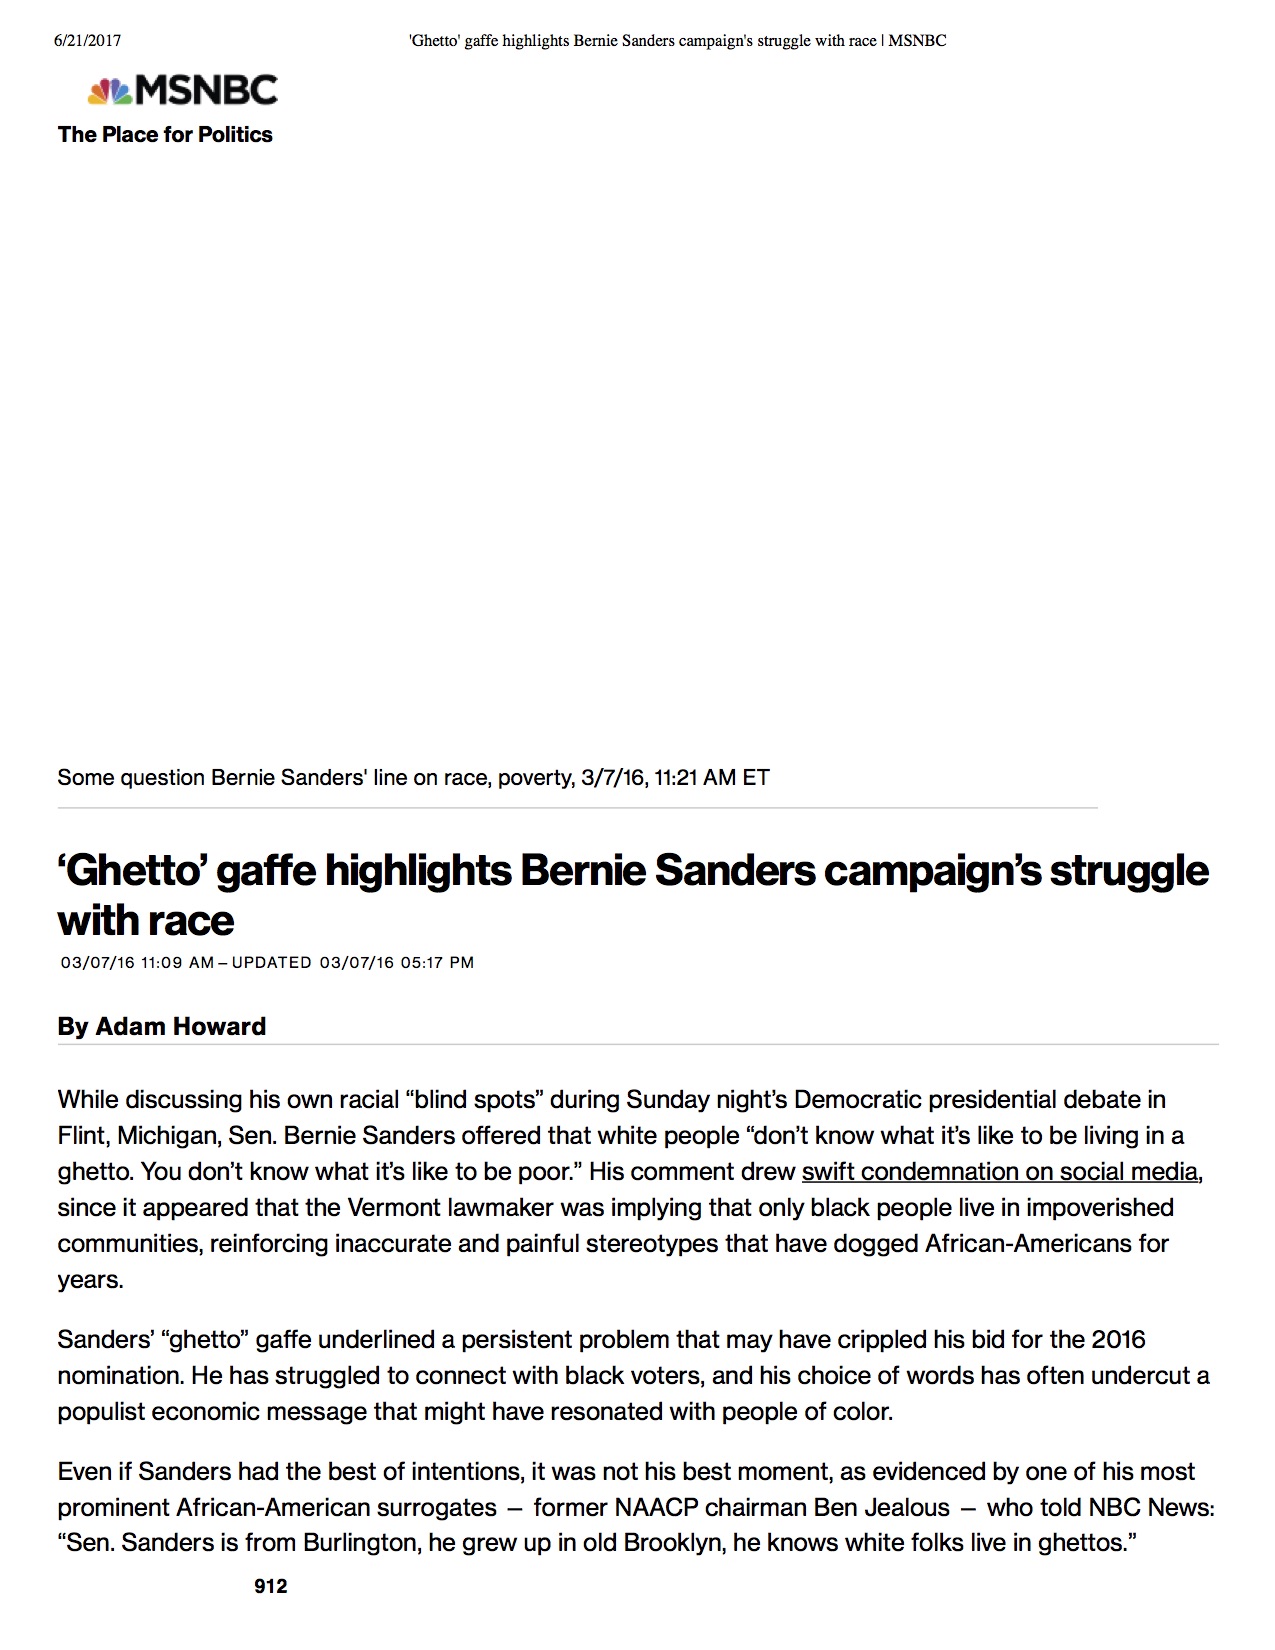 1'Ghetto' gaffe highlights Bernie Sanders campaign's struggle with race _ MSNBC.jpg